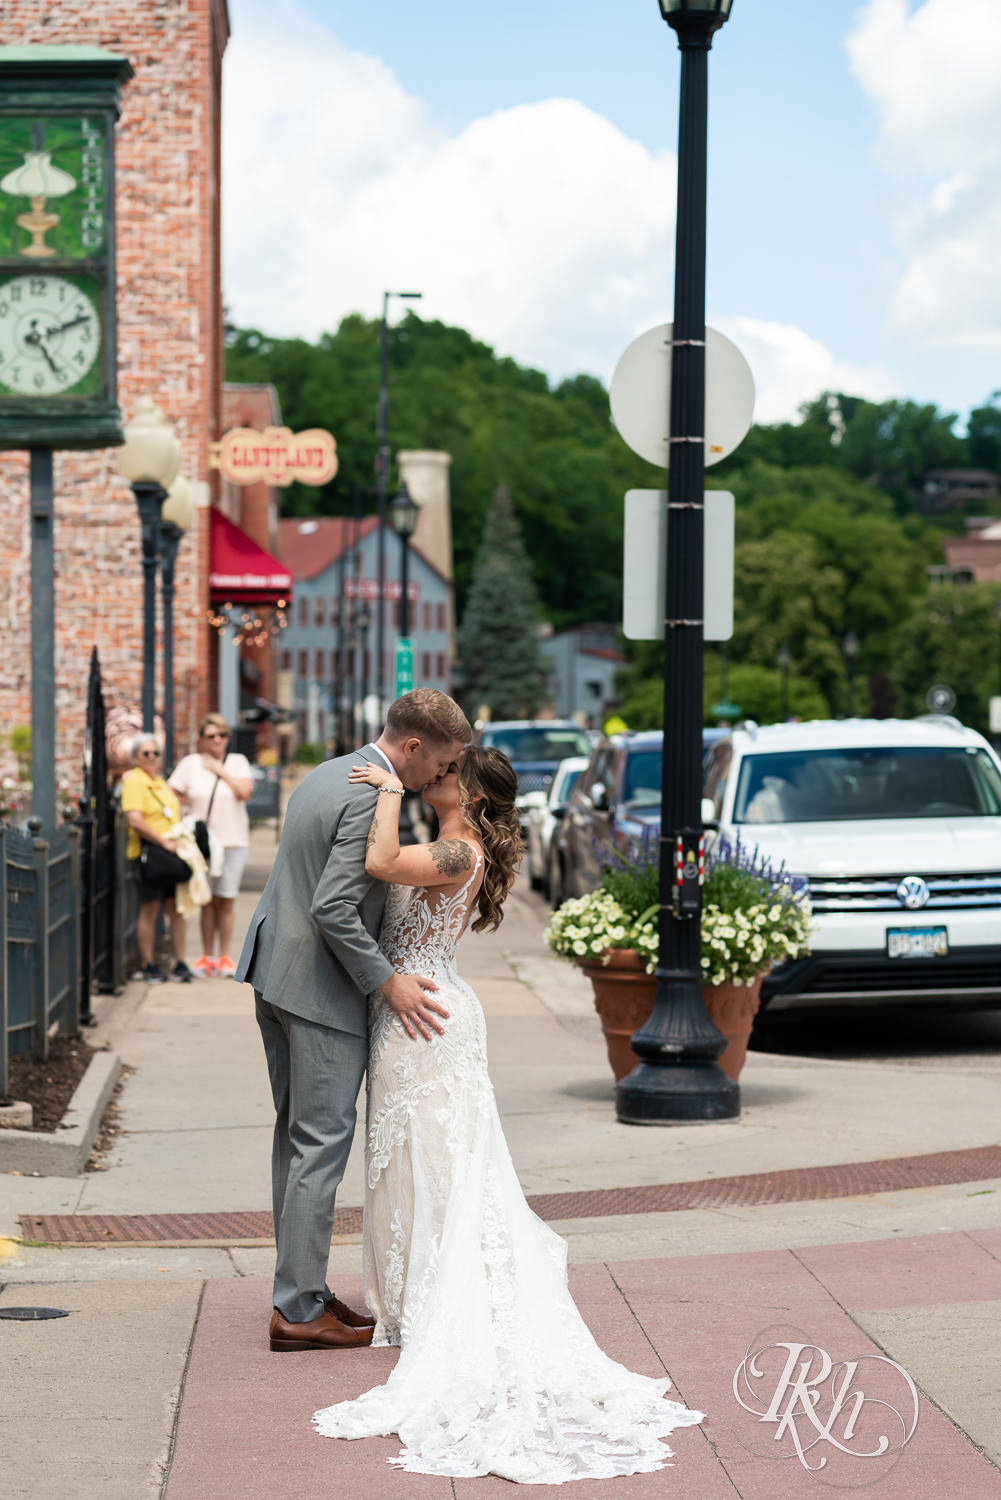 Bride and groom kissing in street in Stillwater, Minnesota.